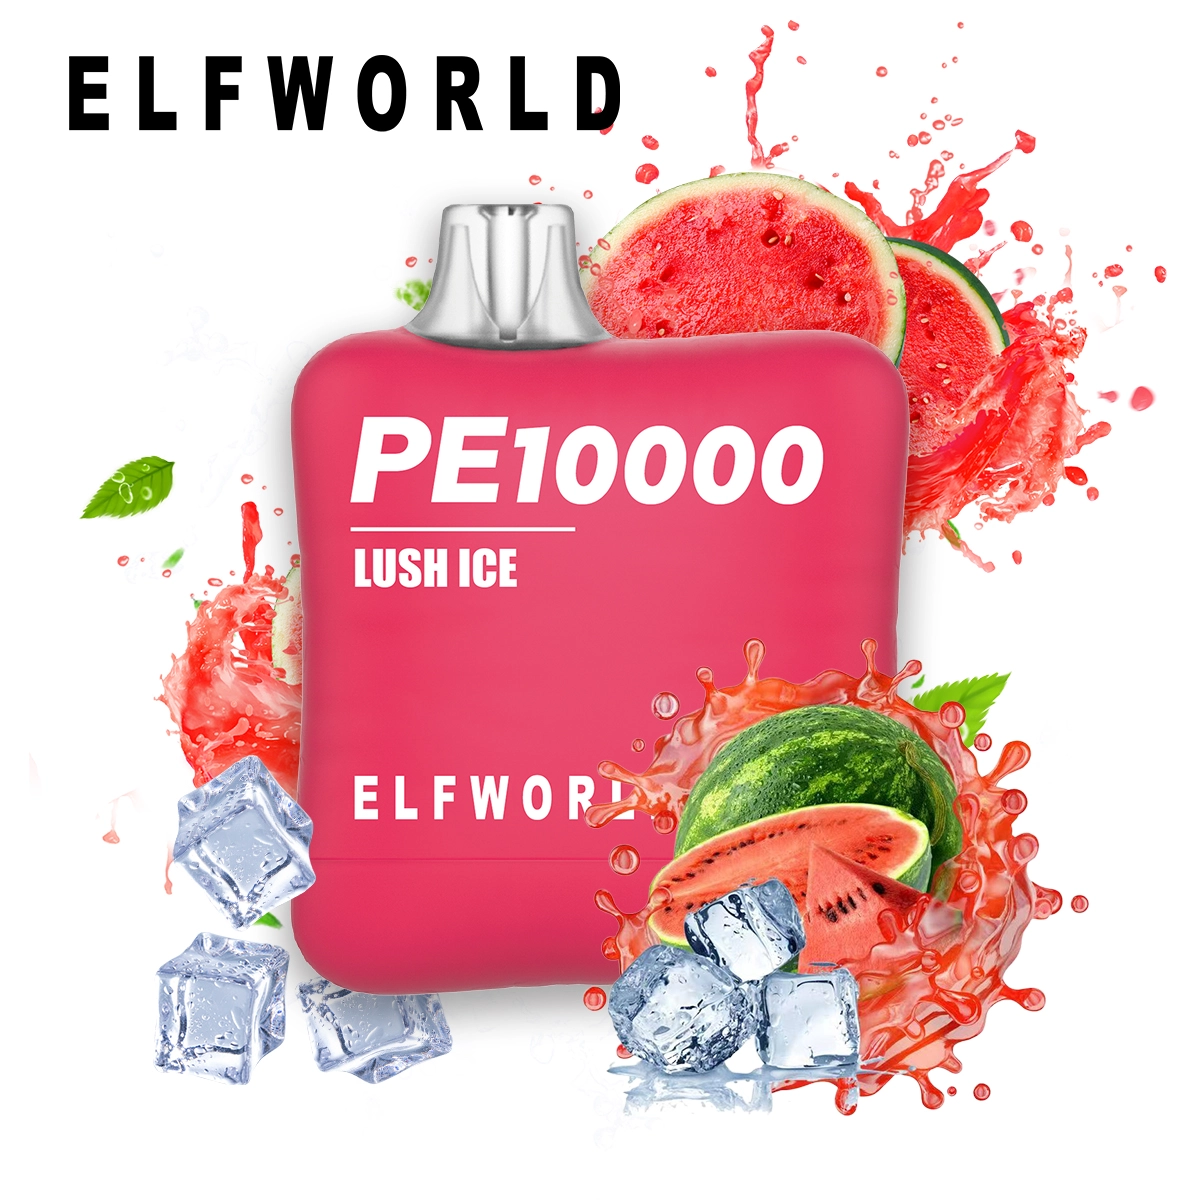 Elf World PE 10000 Lush Ice